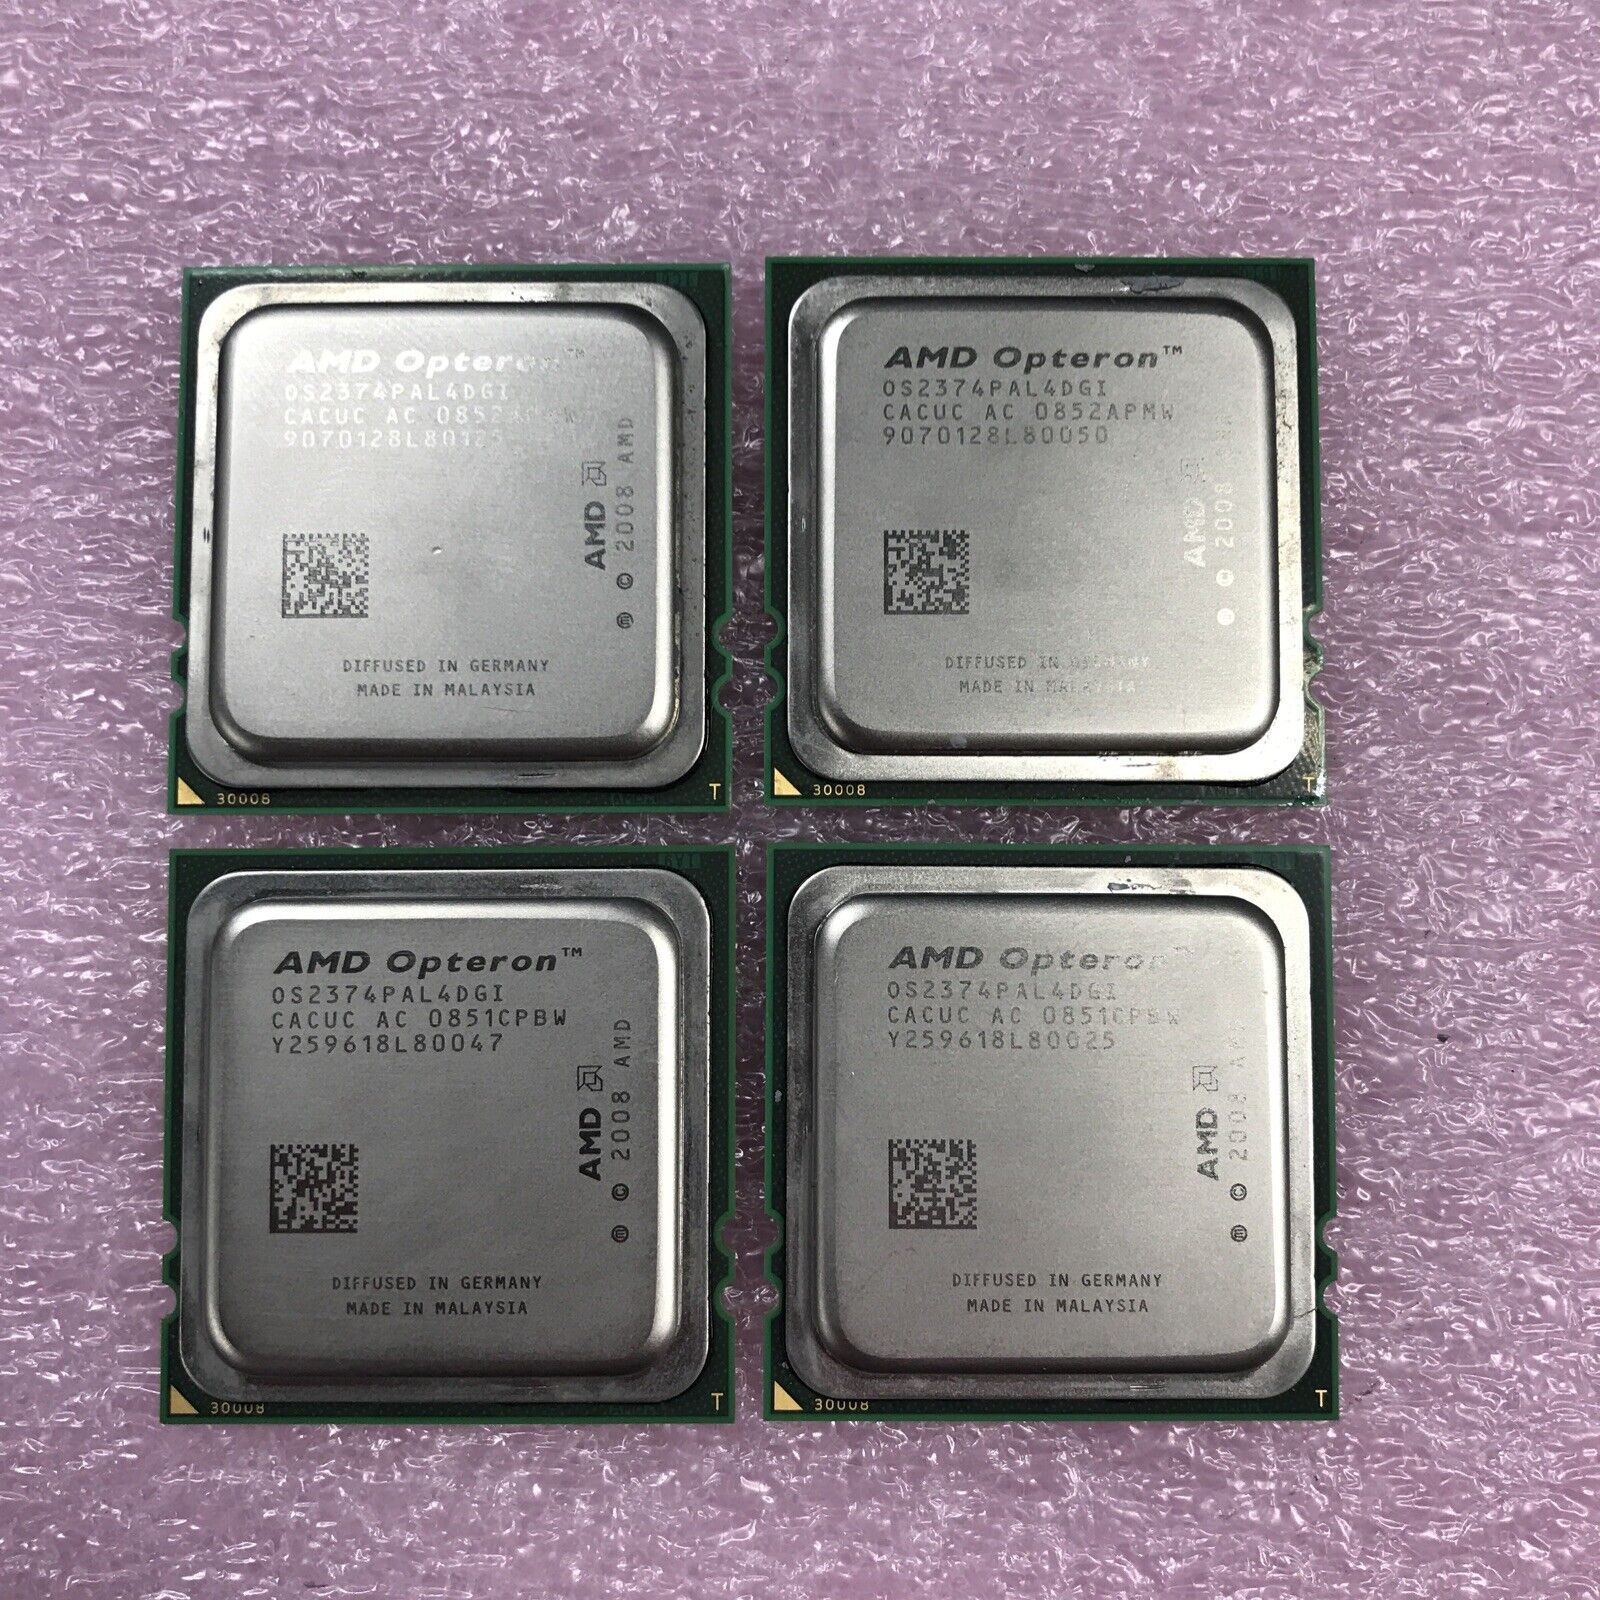 (Lot of 4) AMD Operation 0S2374PAL4DGI CACUC AC 0852APMW 9070128L80125